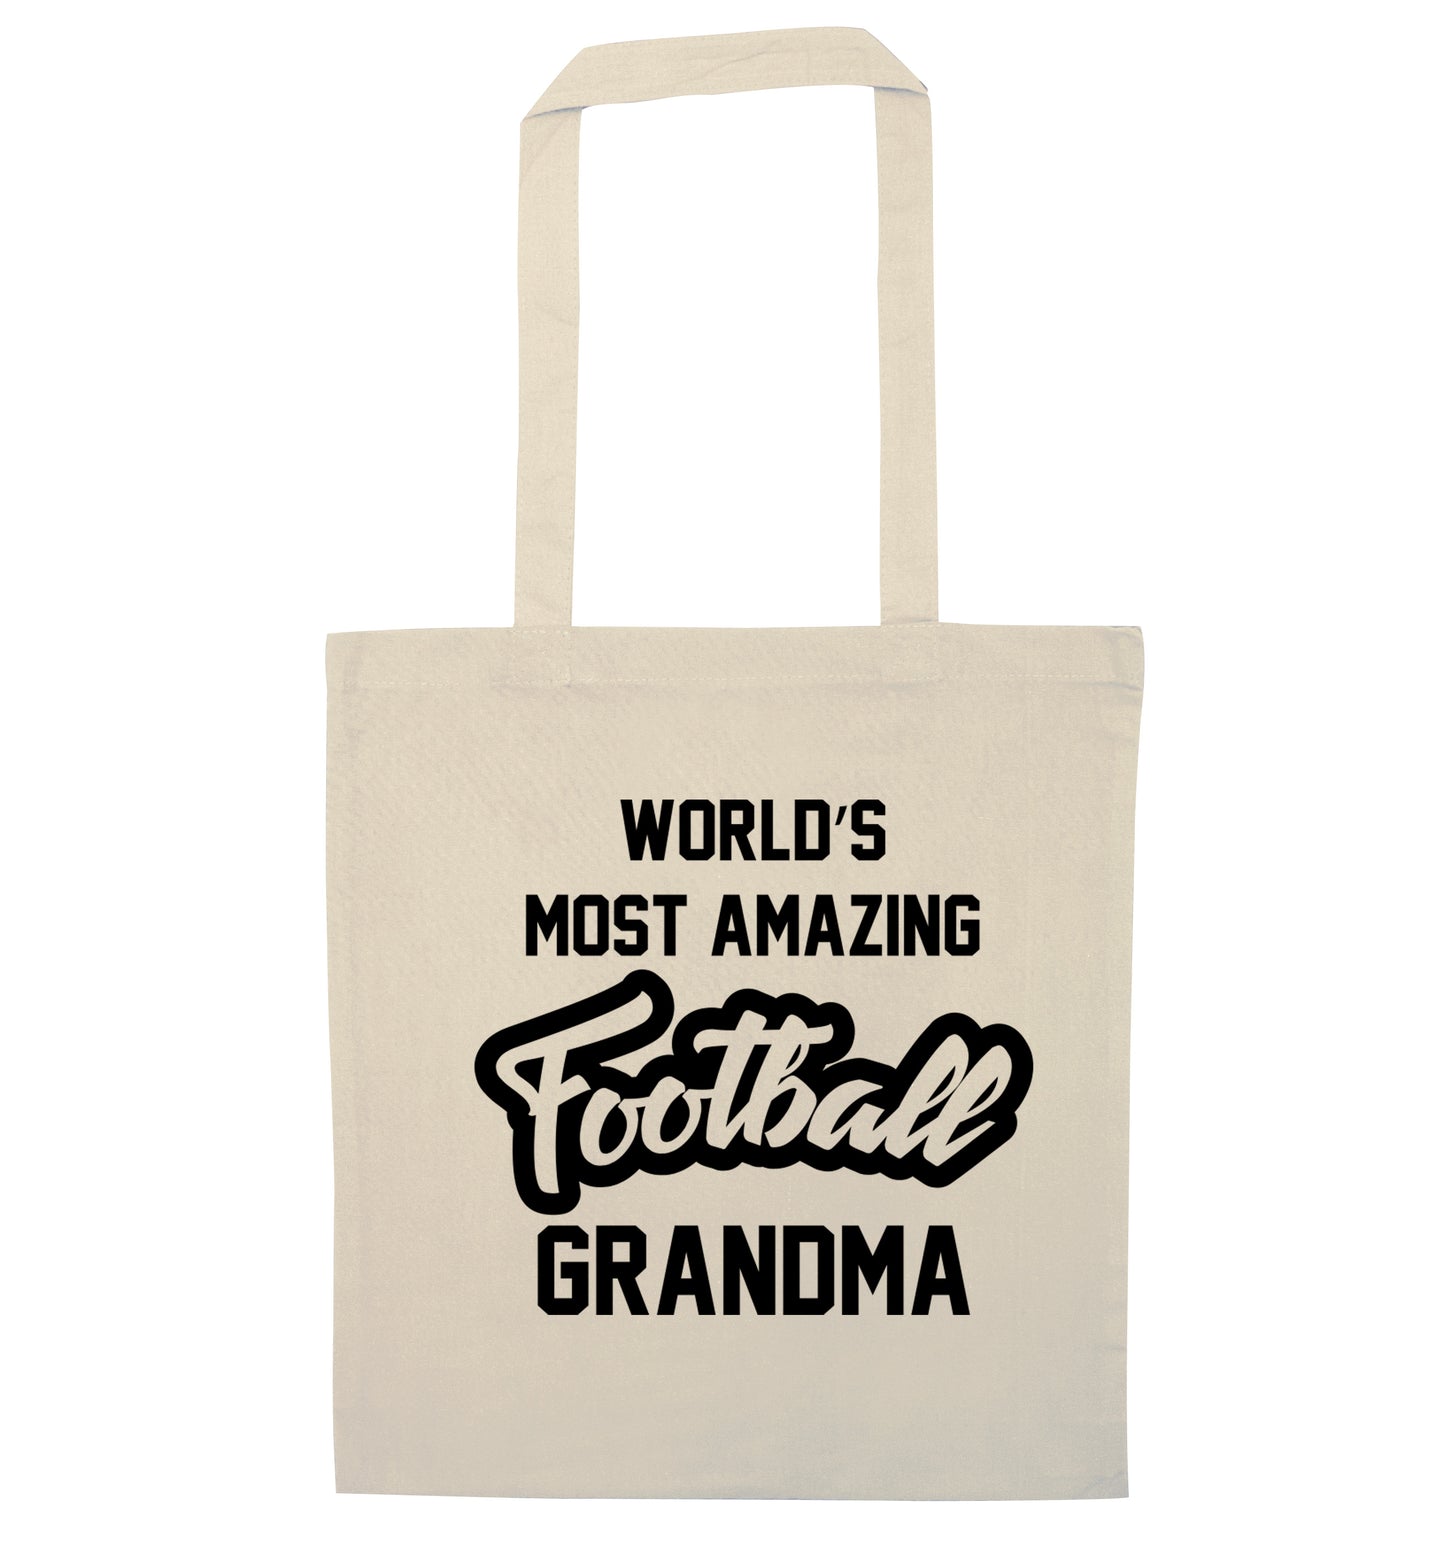 Worlds most amazing football grandma natural tote bag